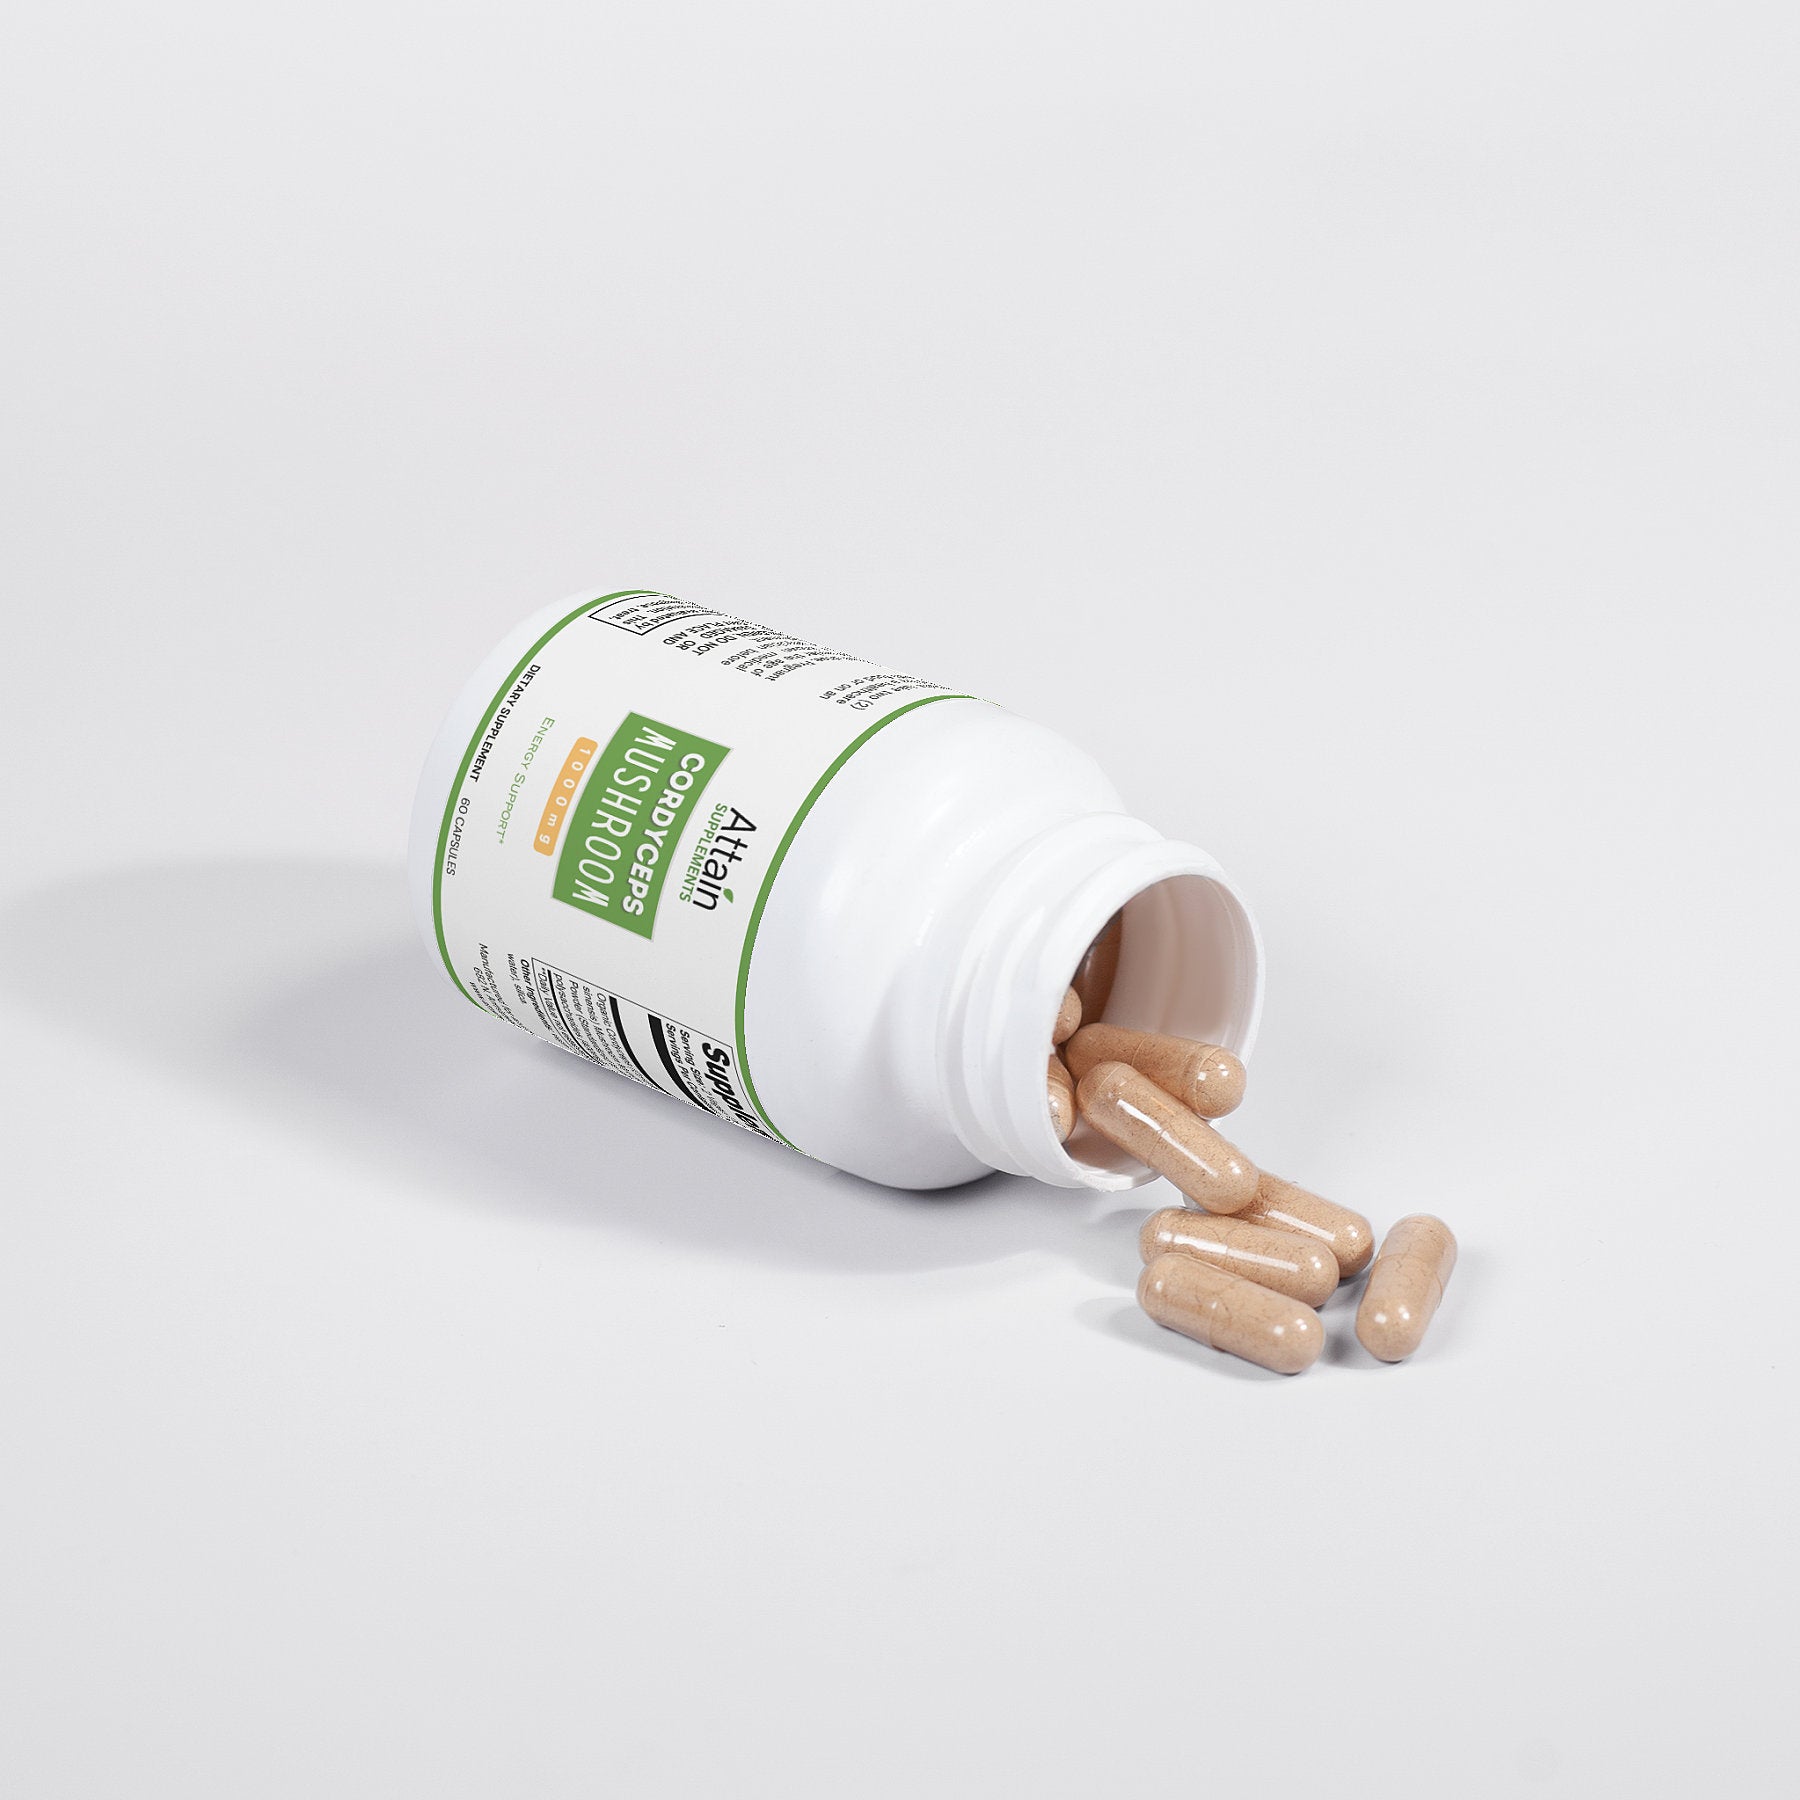 Cordyceps Mushroom Capsules - Attain Supplements